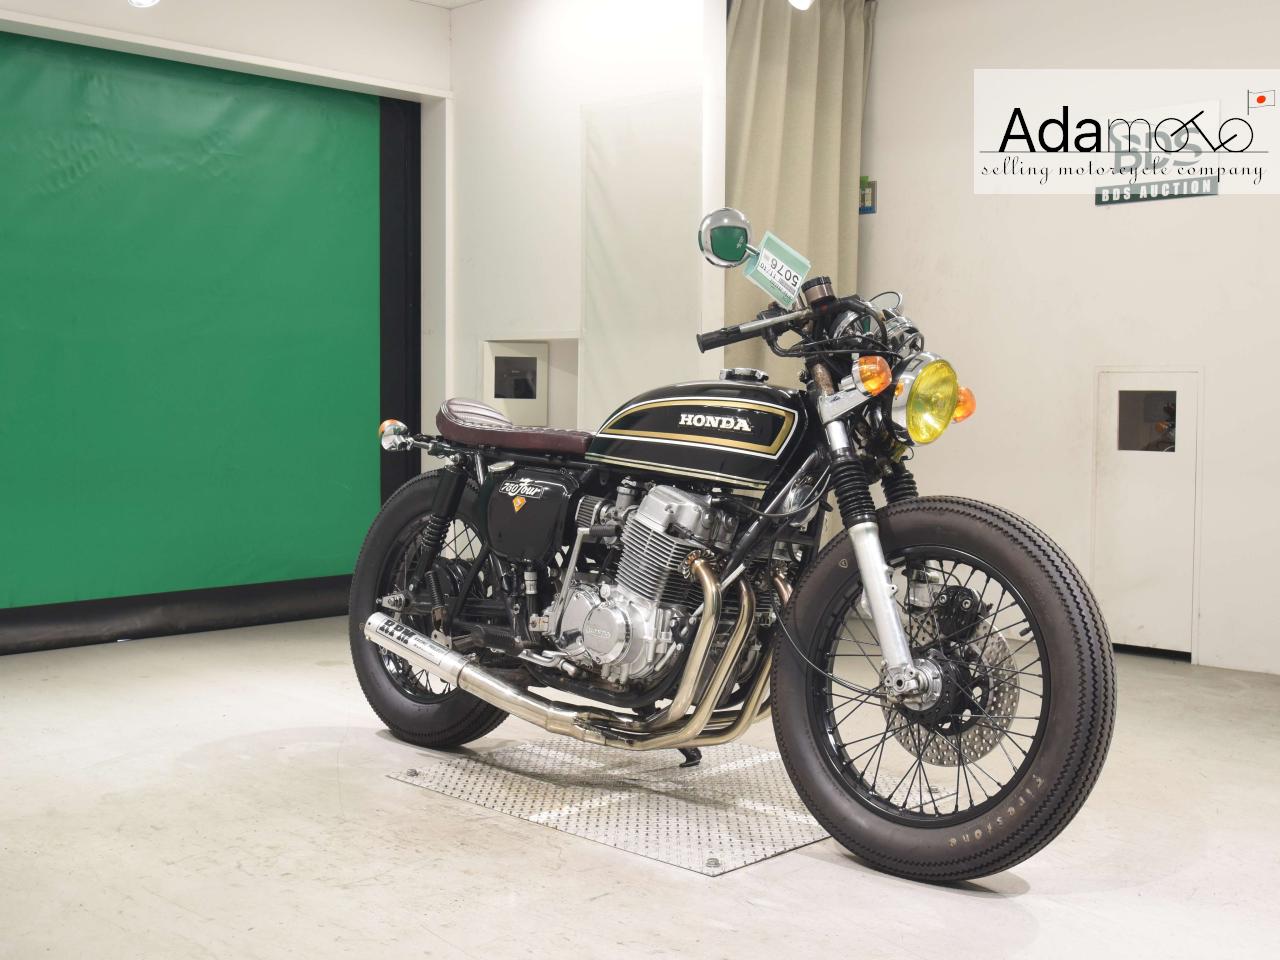 Honda CB750 - Adamoto - Motorcycles from Japan